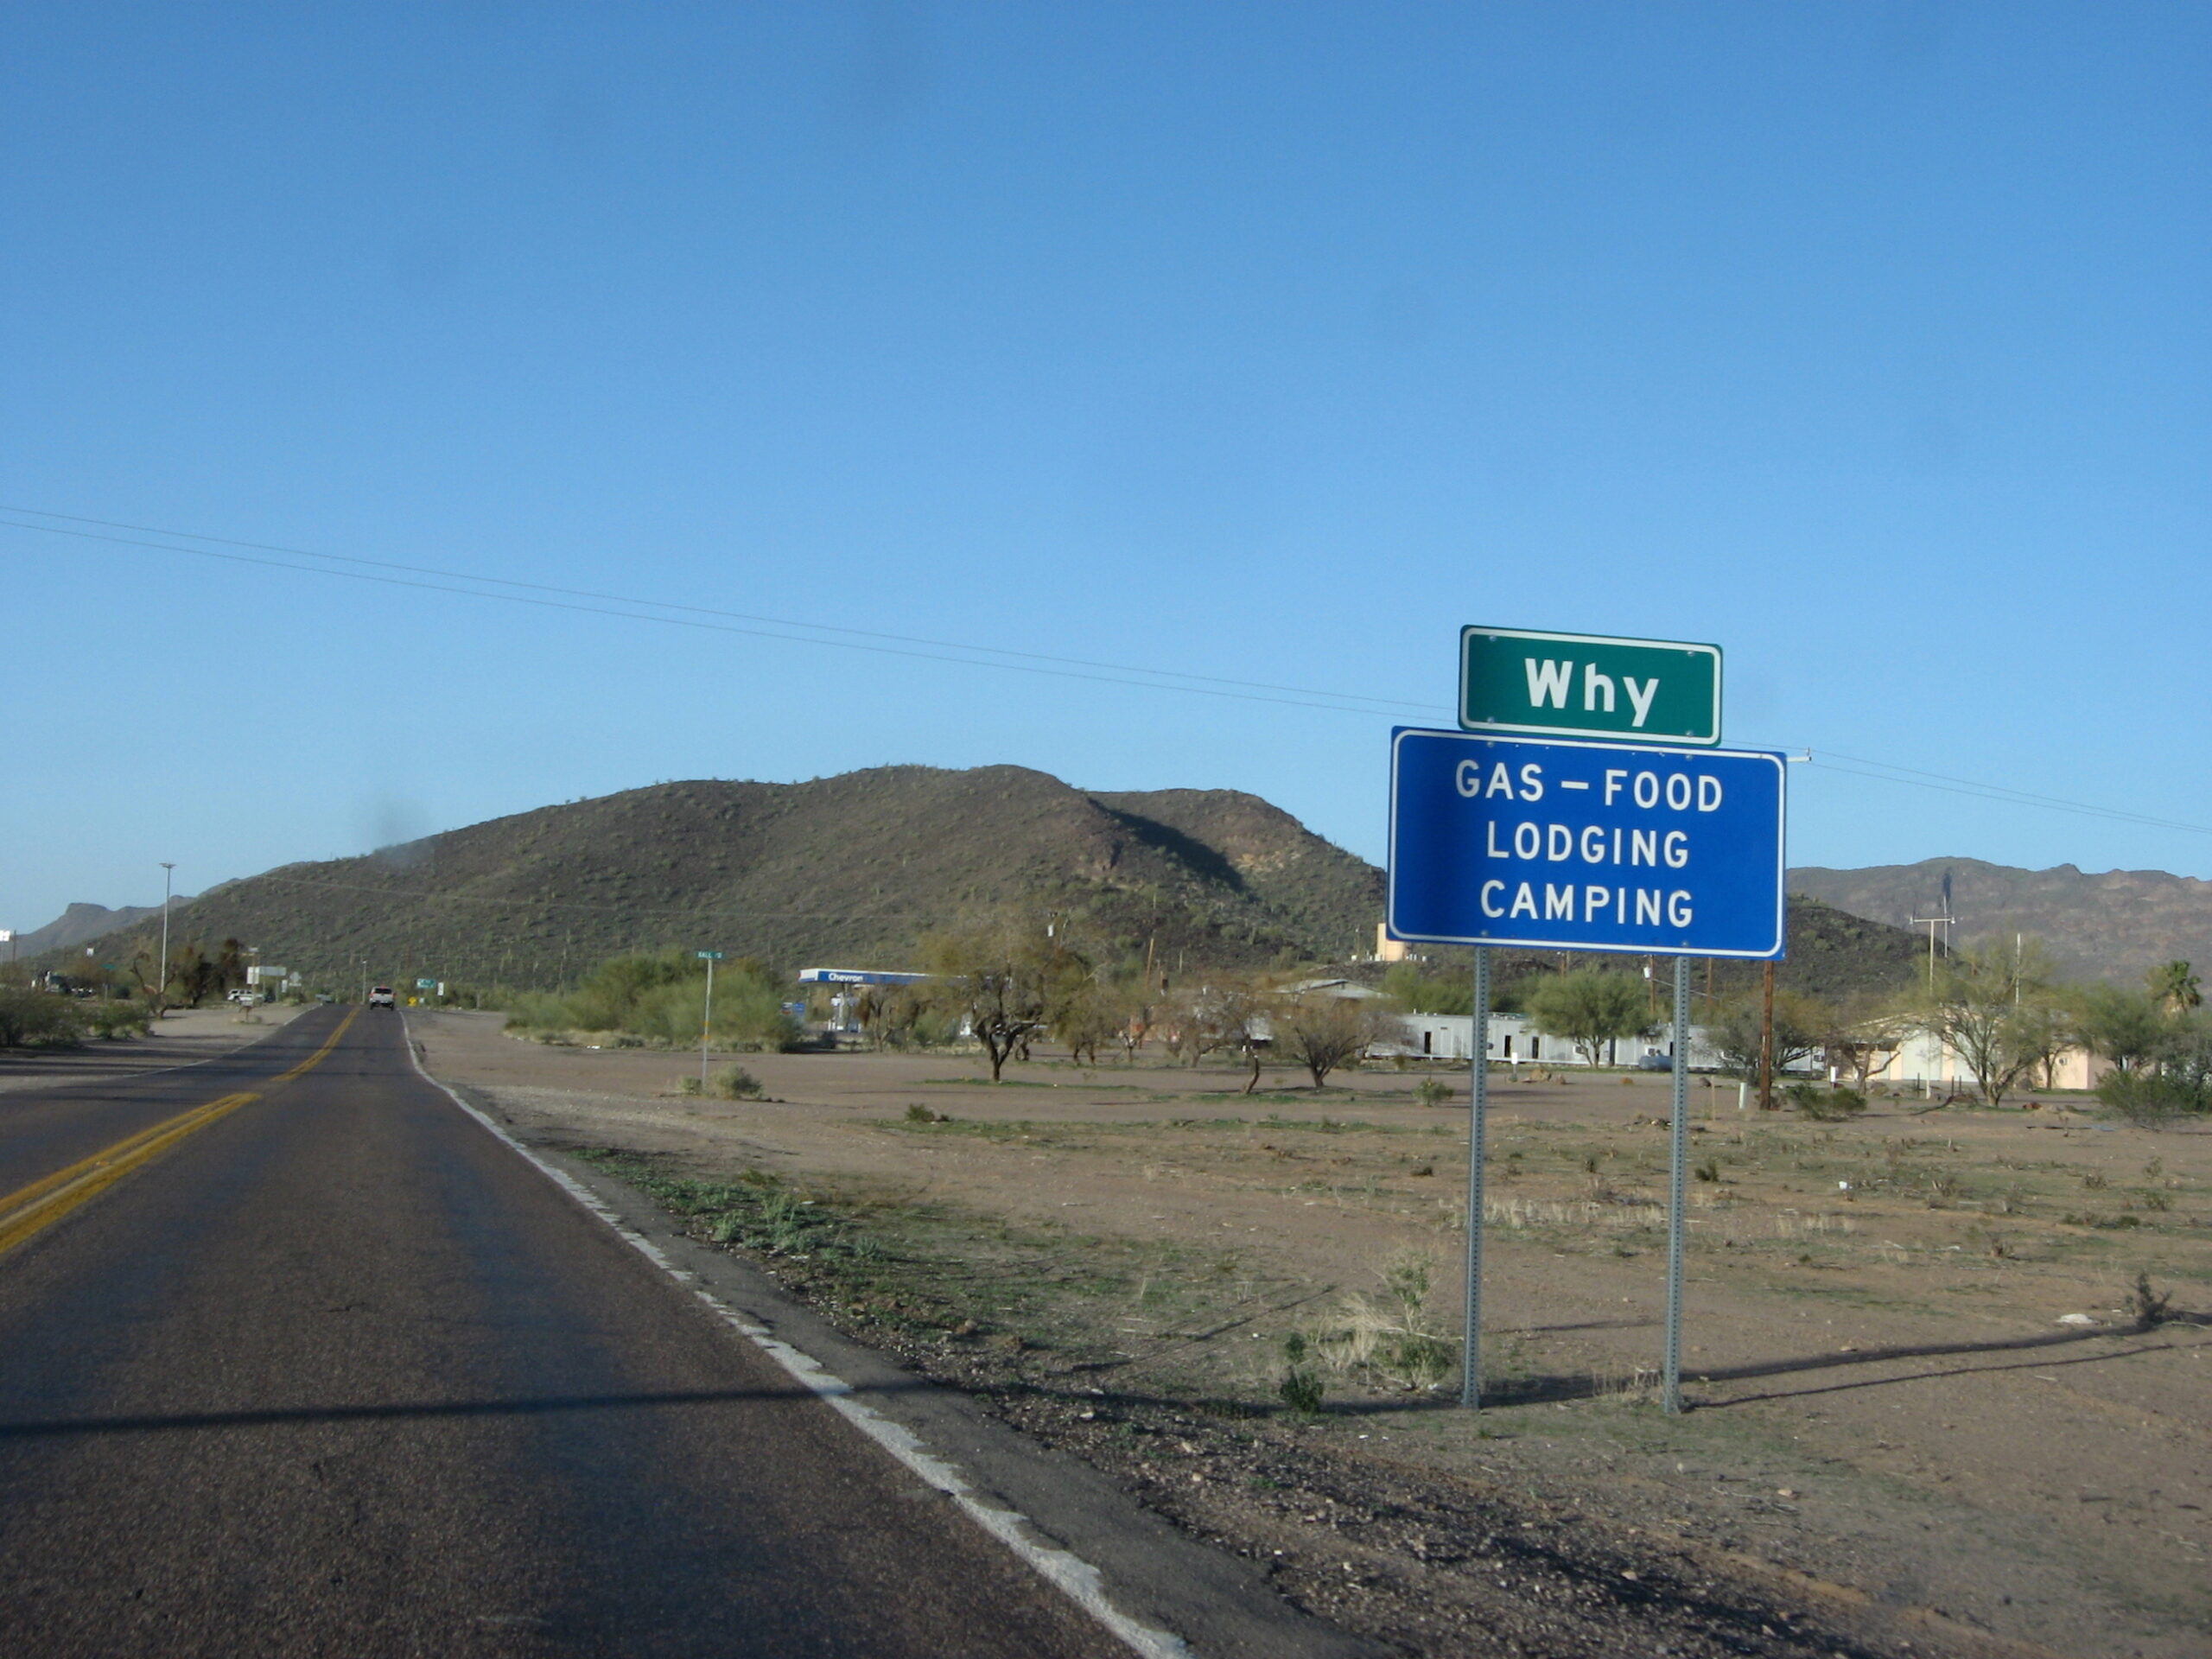 road sign for why arizona against desert road landscape